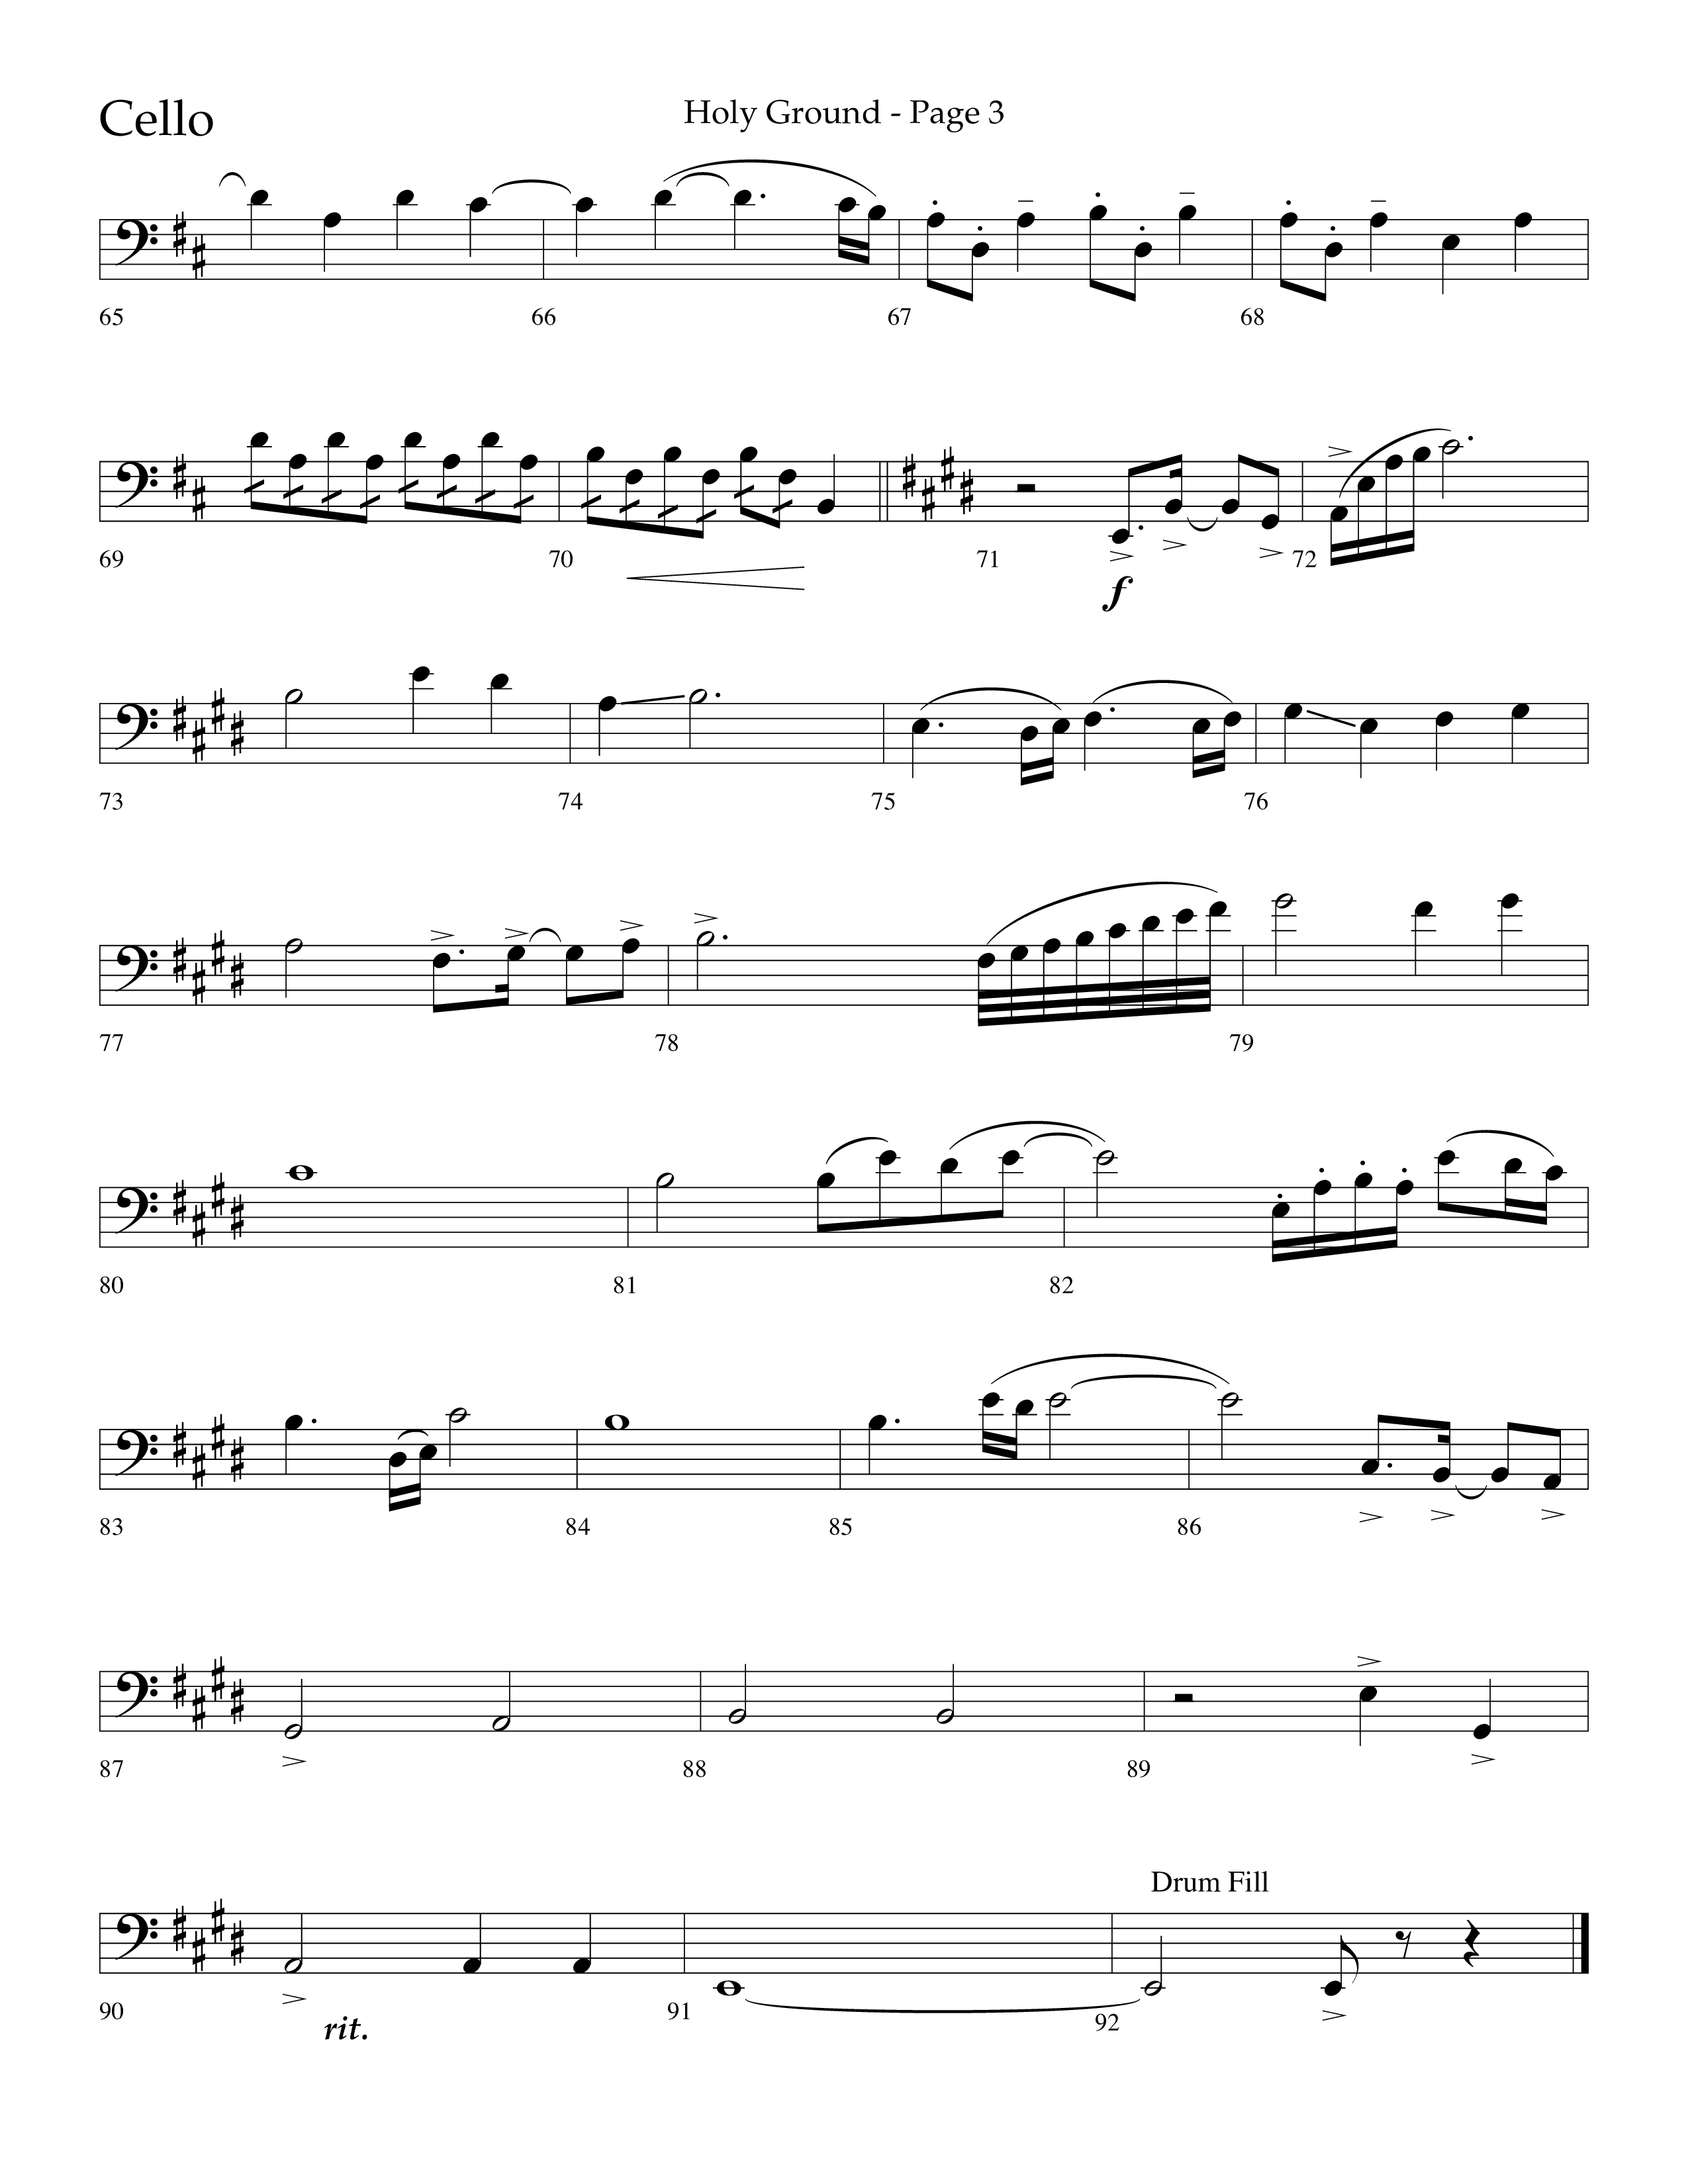 Holy Ground (Choral Anthem SATB) Cello (Lifeway Choral / Arr. Bradley Knight)